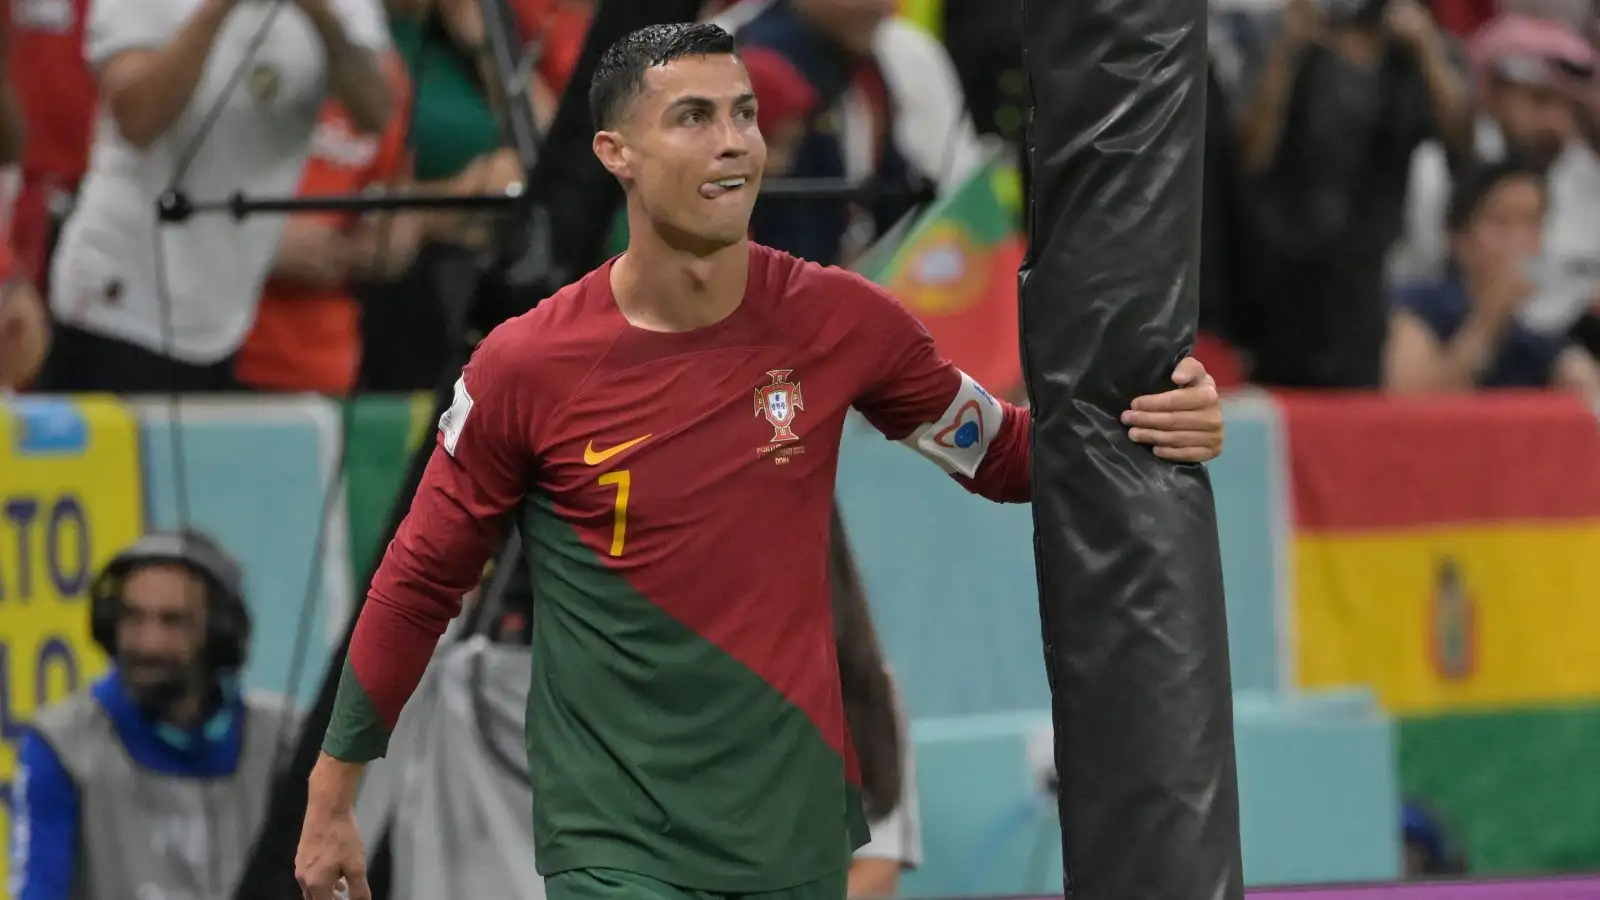 Cristiano Ronaldo during a match